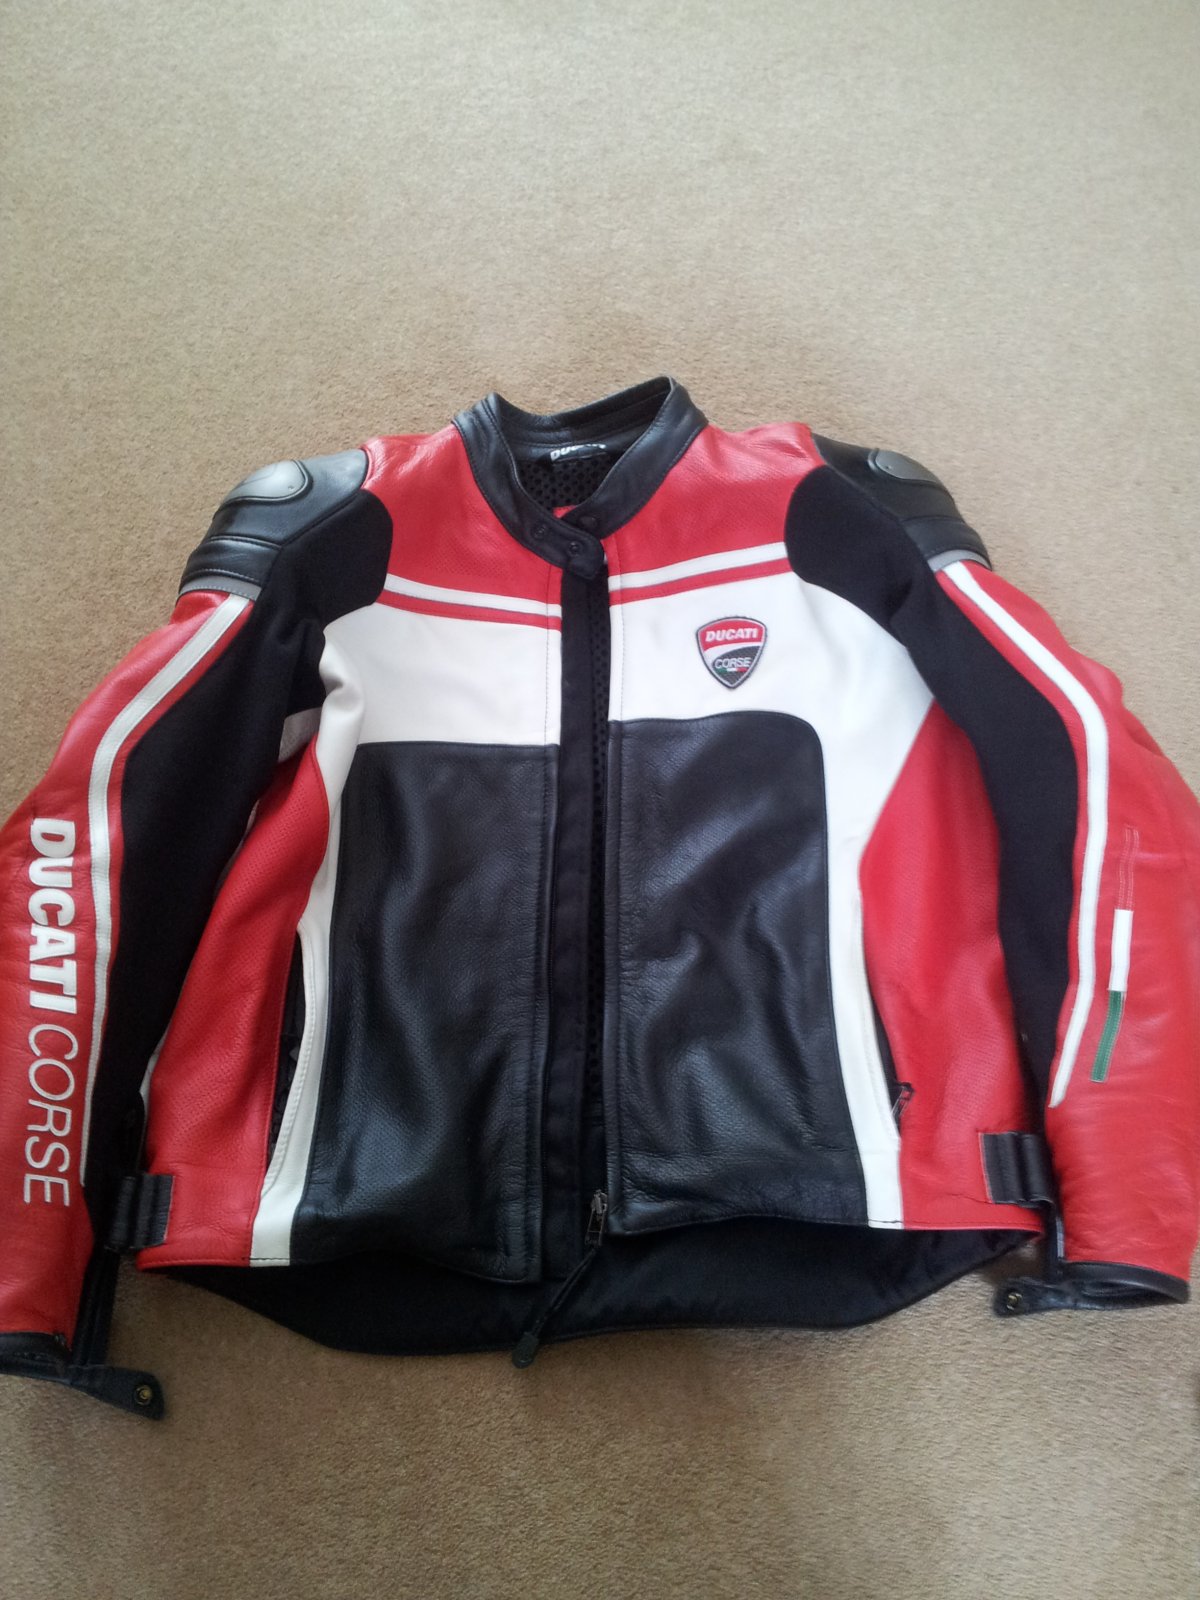 For Sale - Ducati Dainese Corse Leather Jacket, (genuine) | Ducati Forum